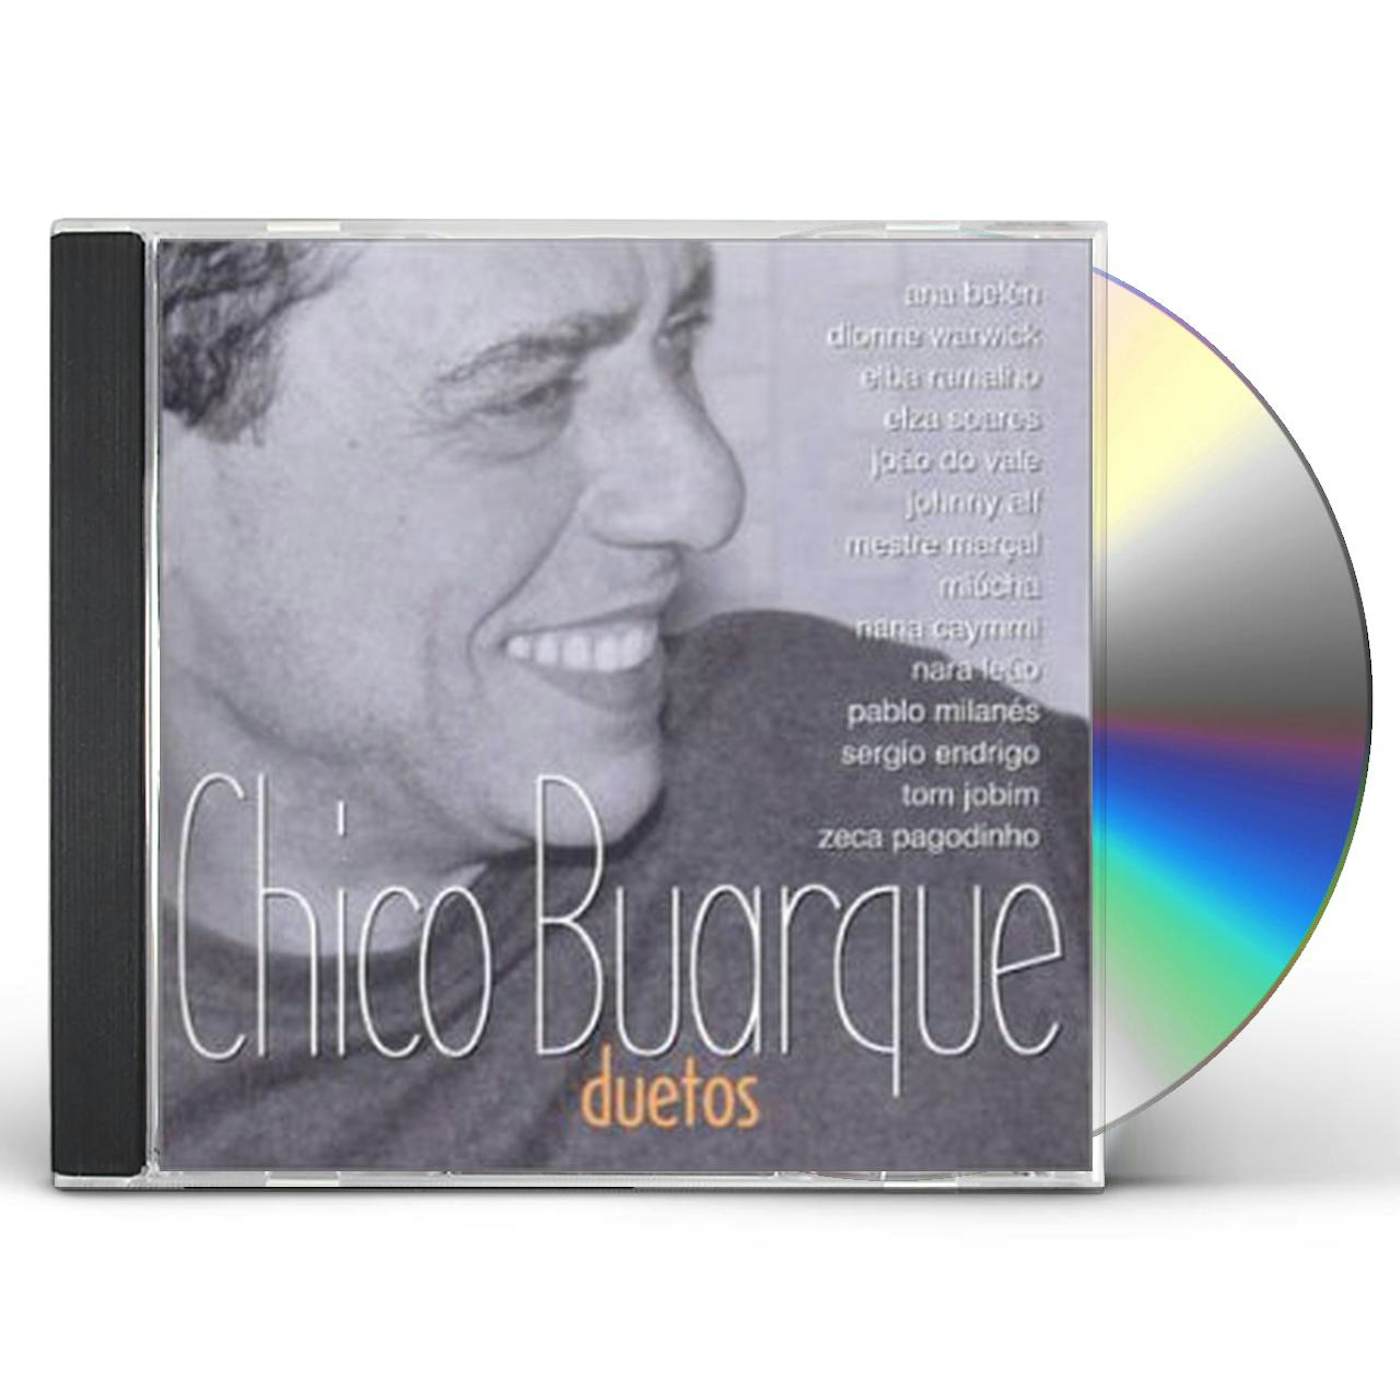 Chico Buarque DUETOS CD